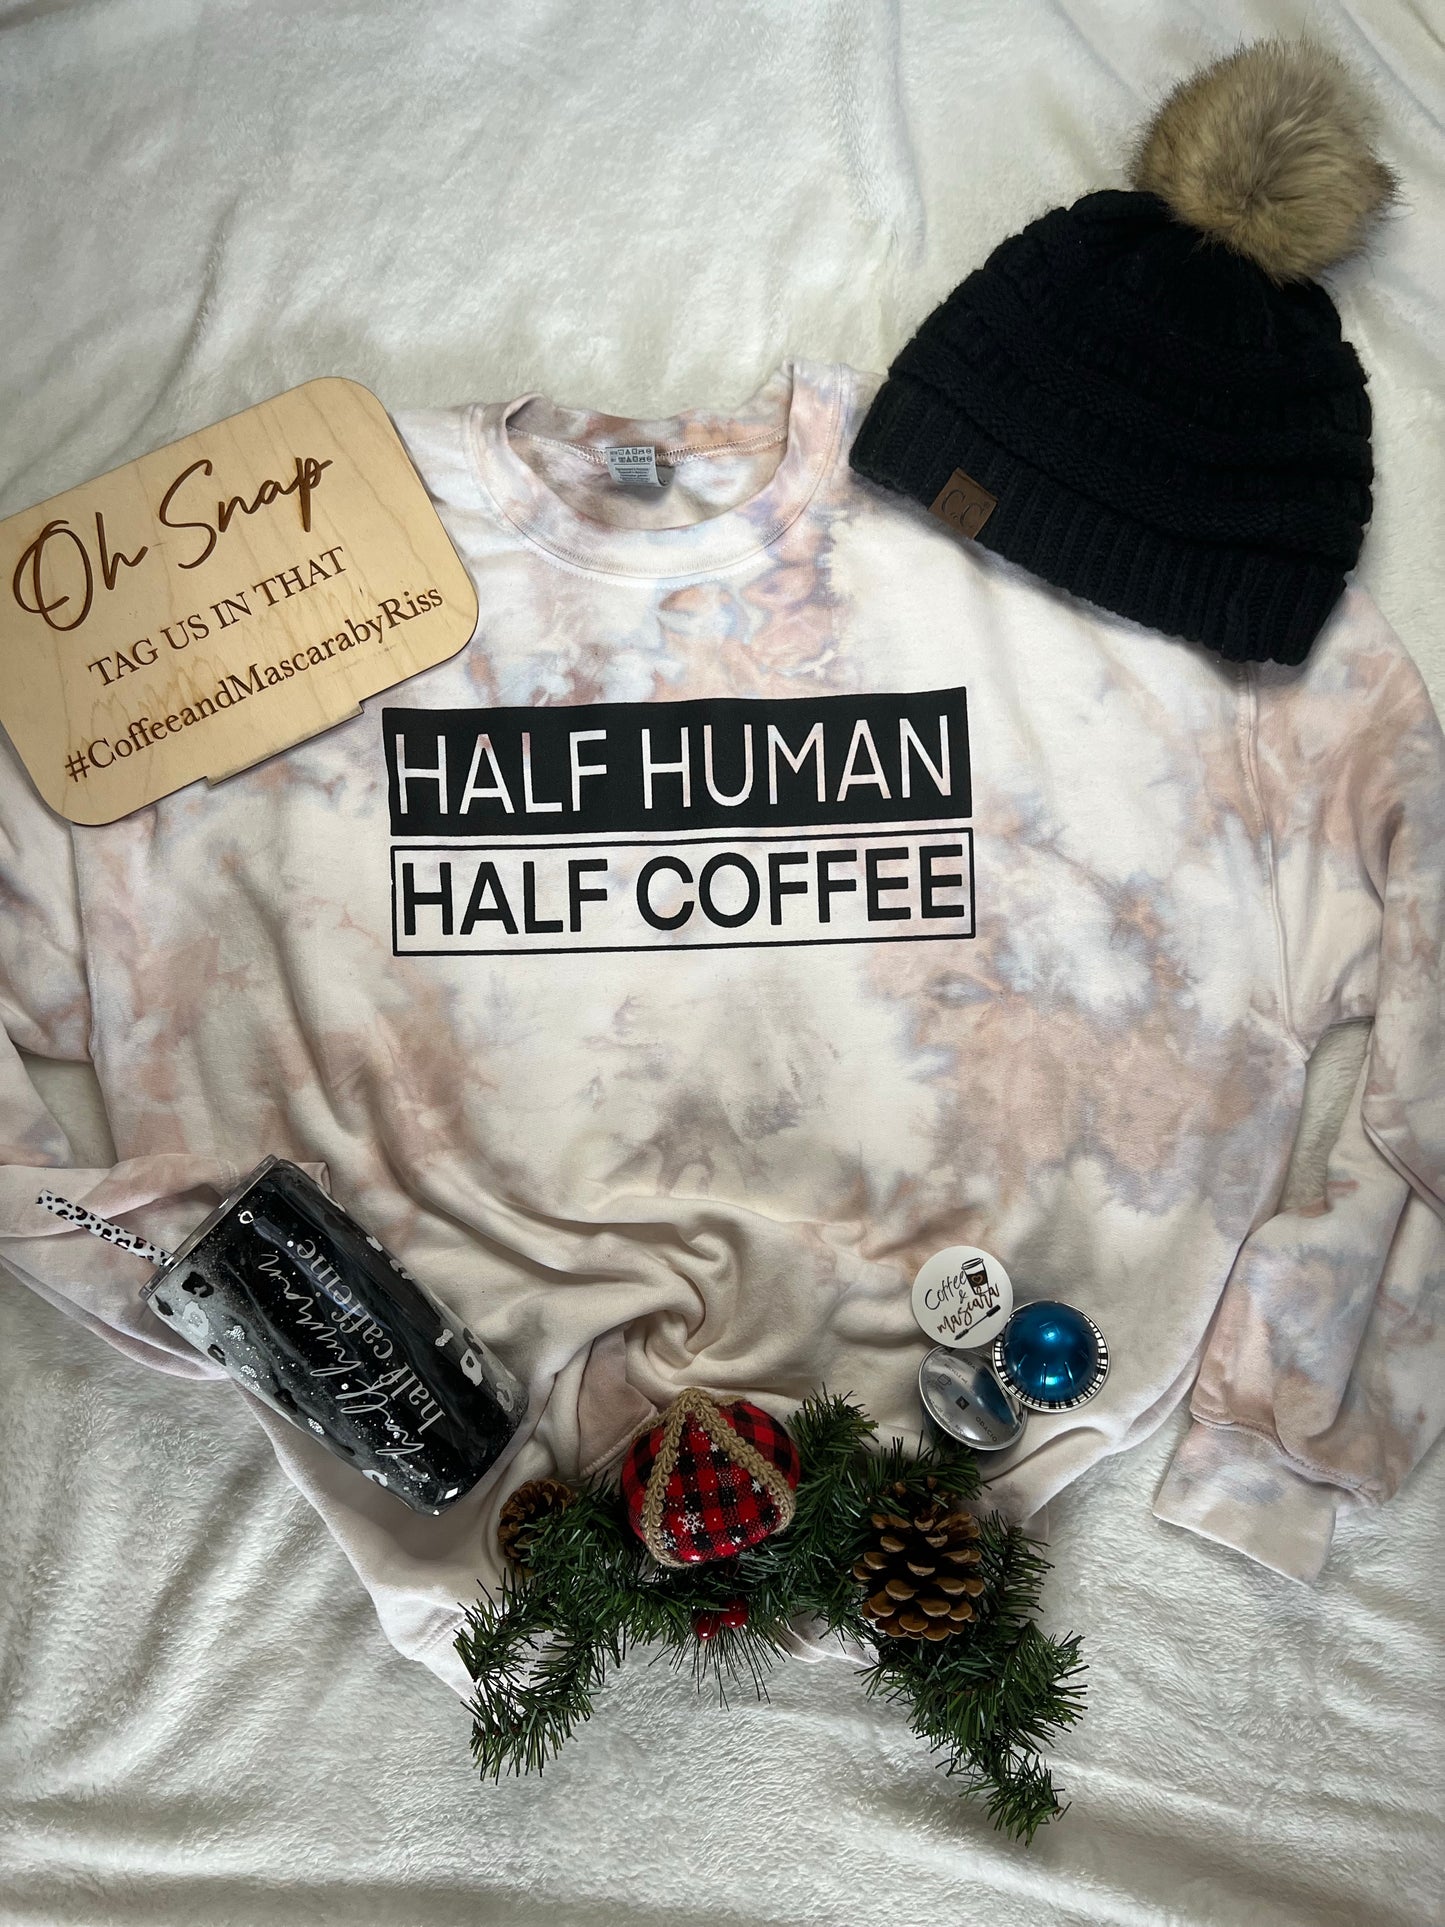 Half human half coffee